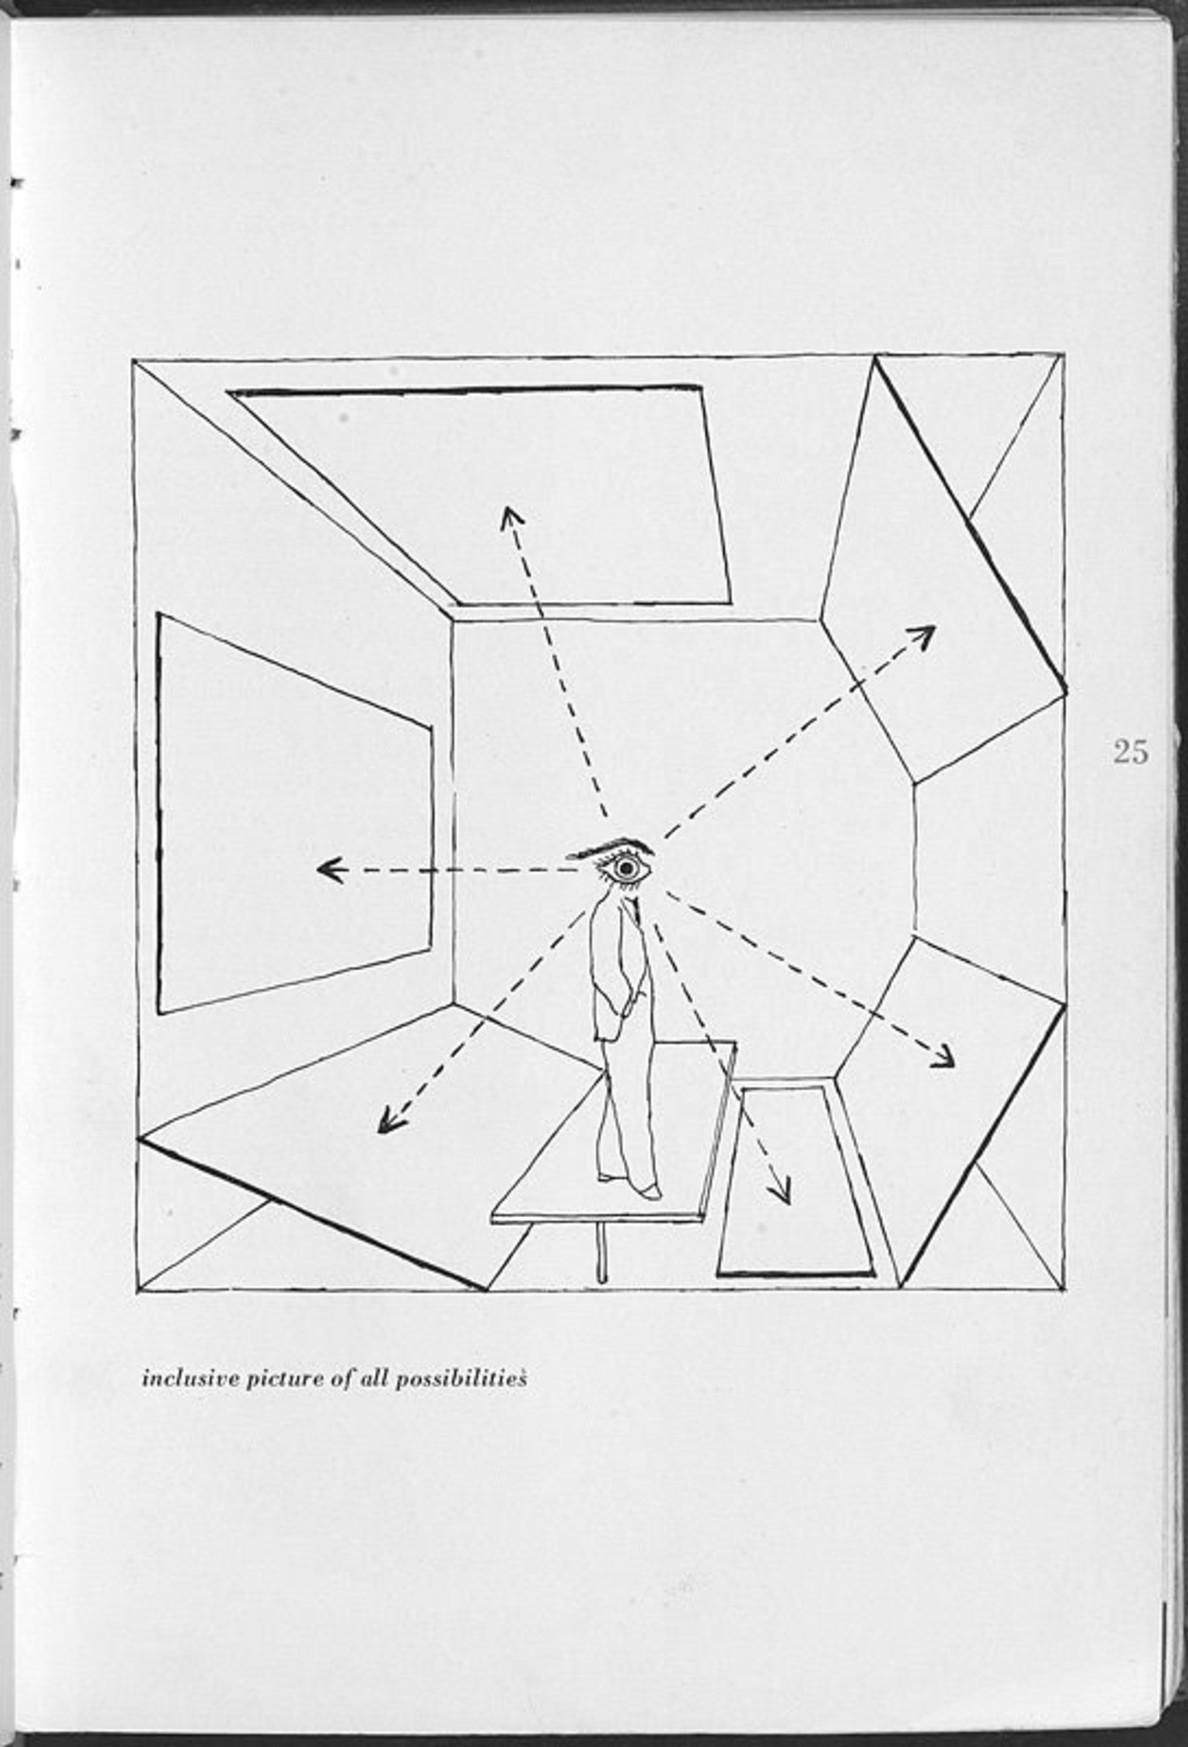 herbert-bayer-the-fundamentals-of-exhibition-design-1937.jpg